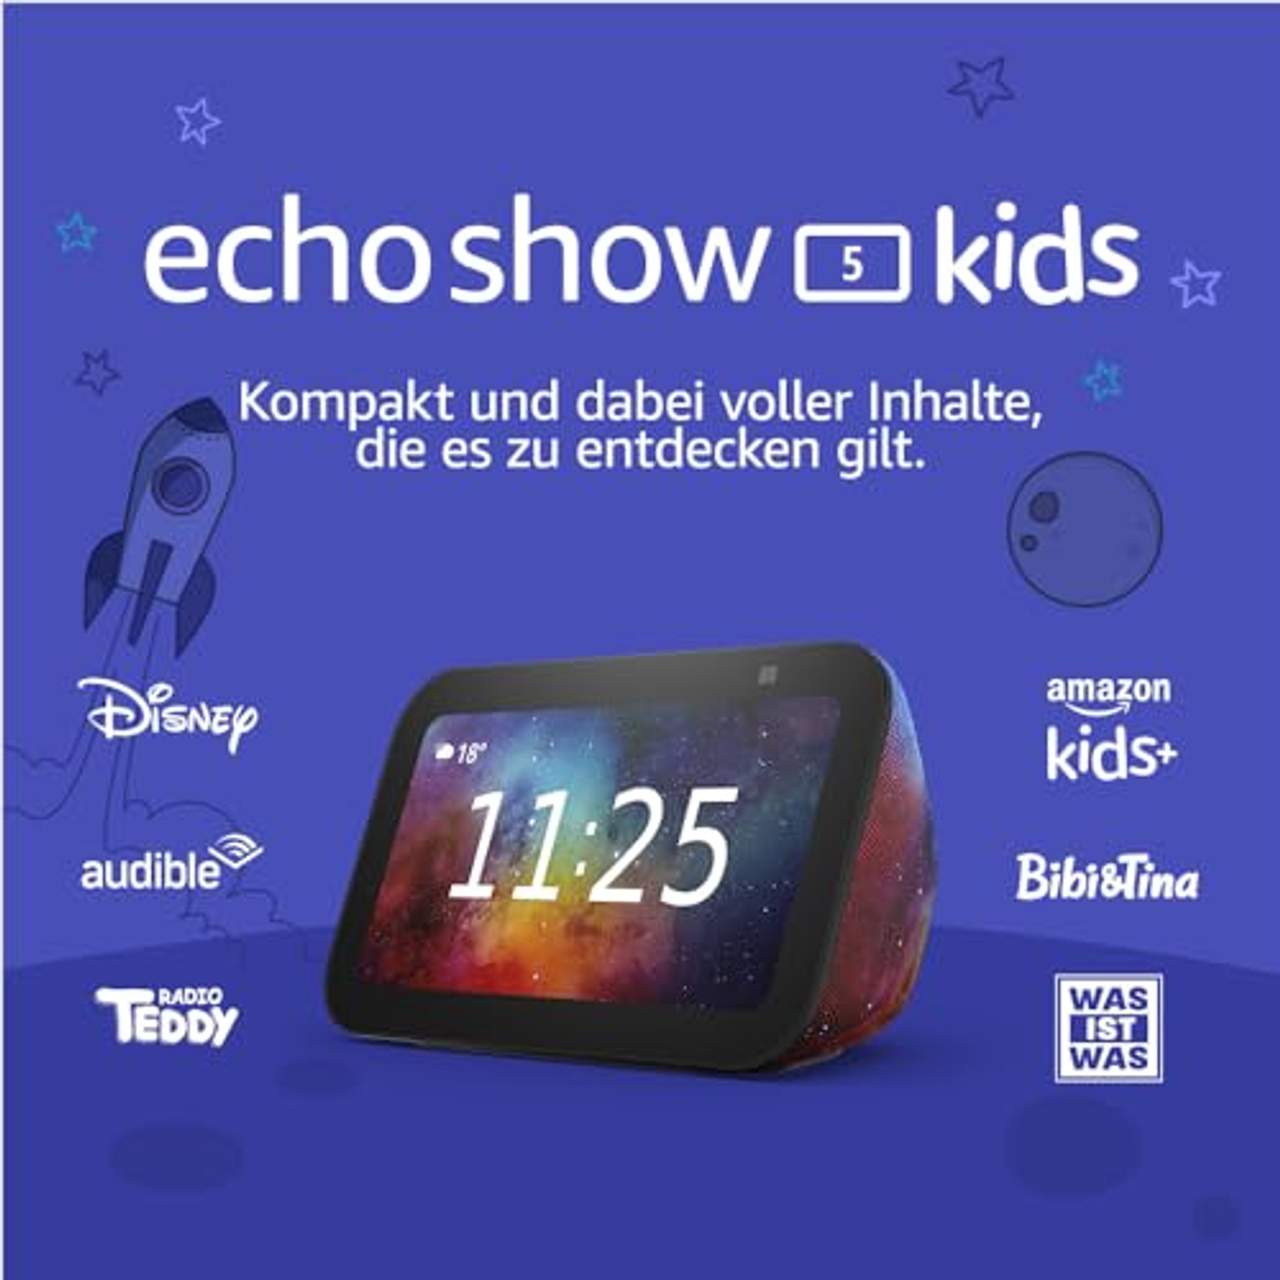 Amazon Echo Show 5 Kids